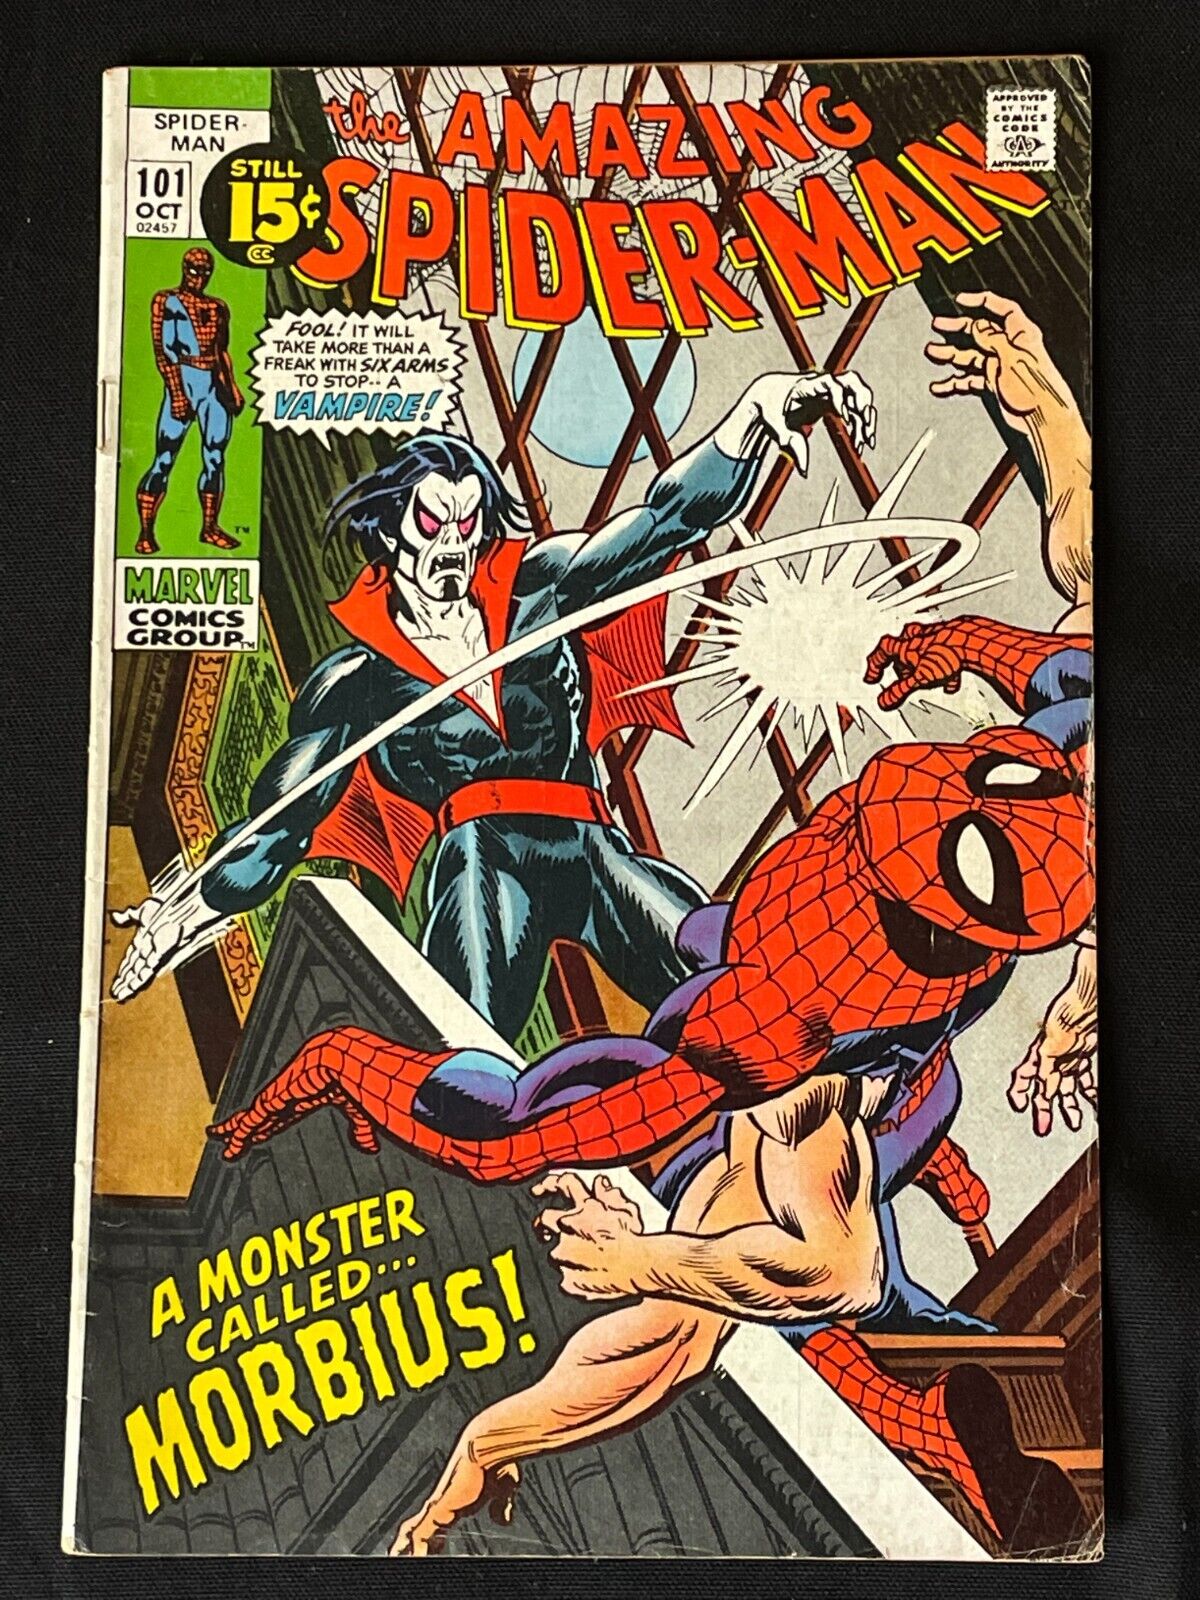 RARE 1971 AMAZING SPIDER-MAN #101 KEY ISSUE 1ST MORBIUS COMPLETE NICE